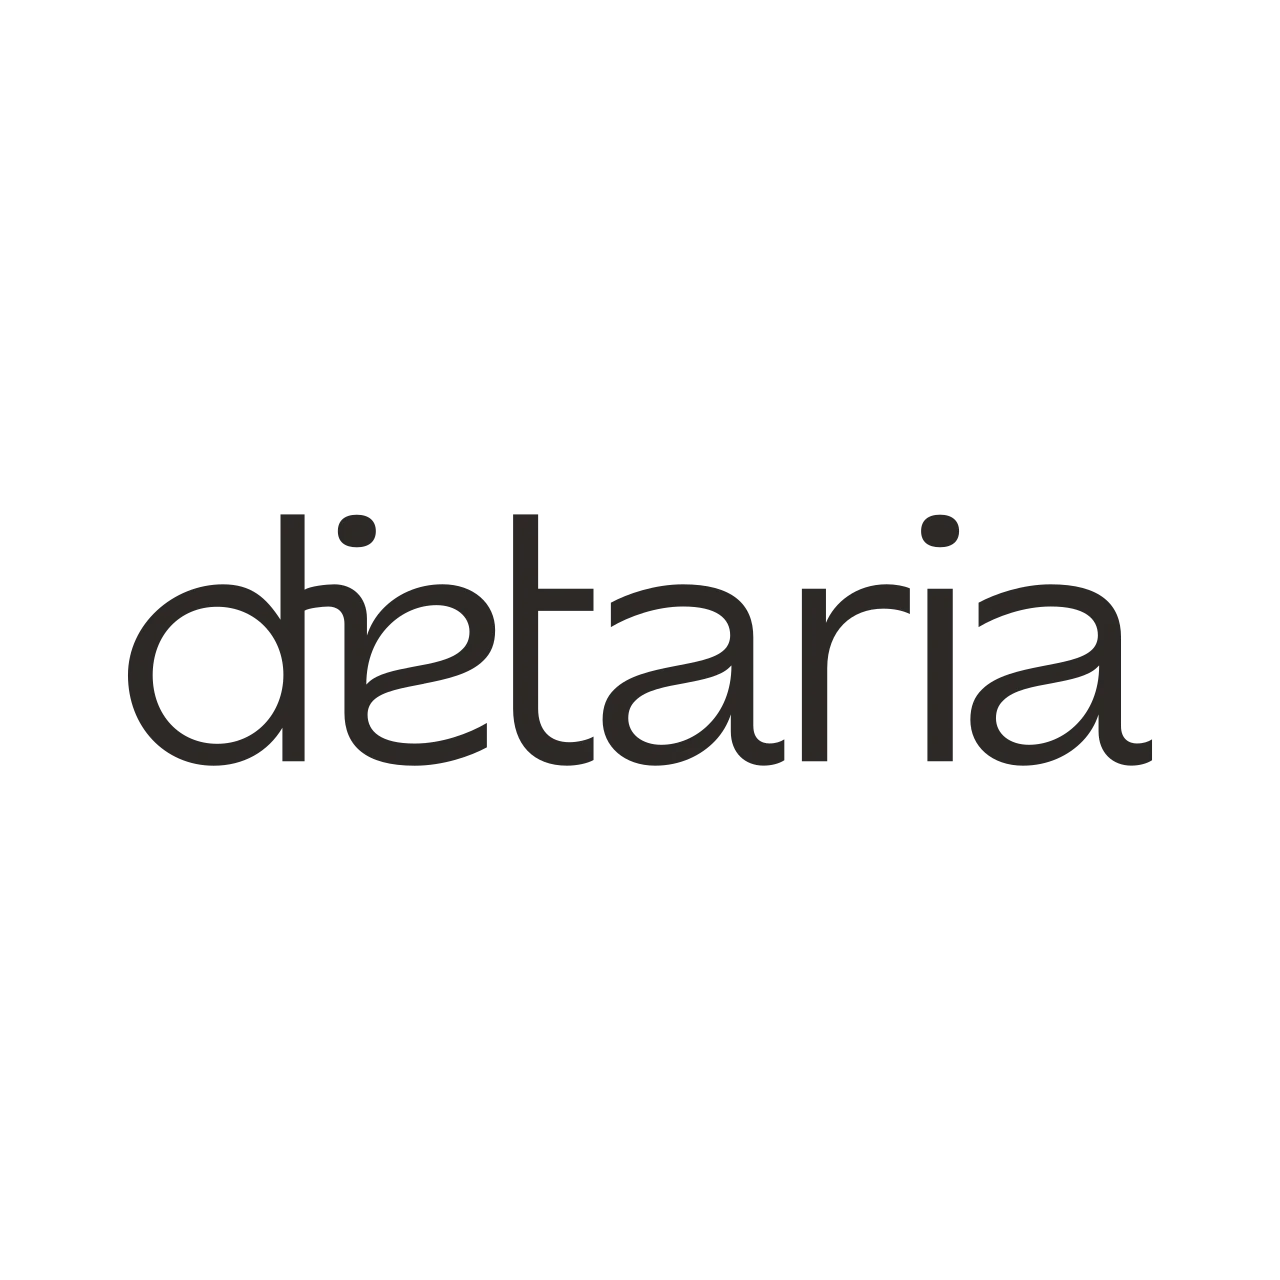 logo_dietaria